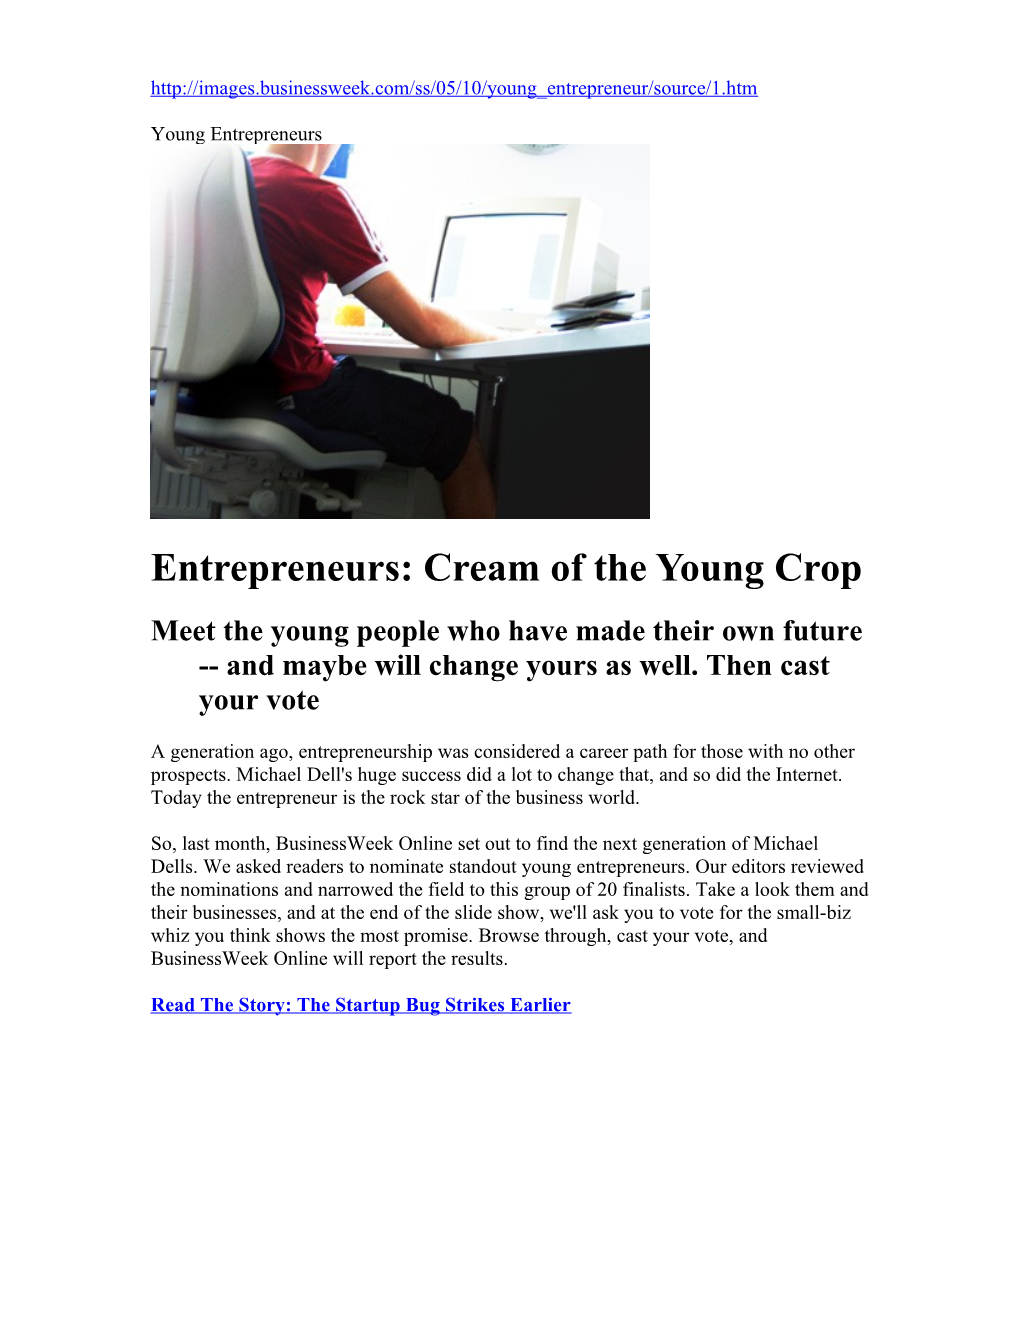 Entrepreneurs: Cream of the Young Crop